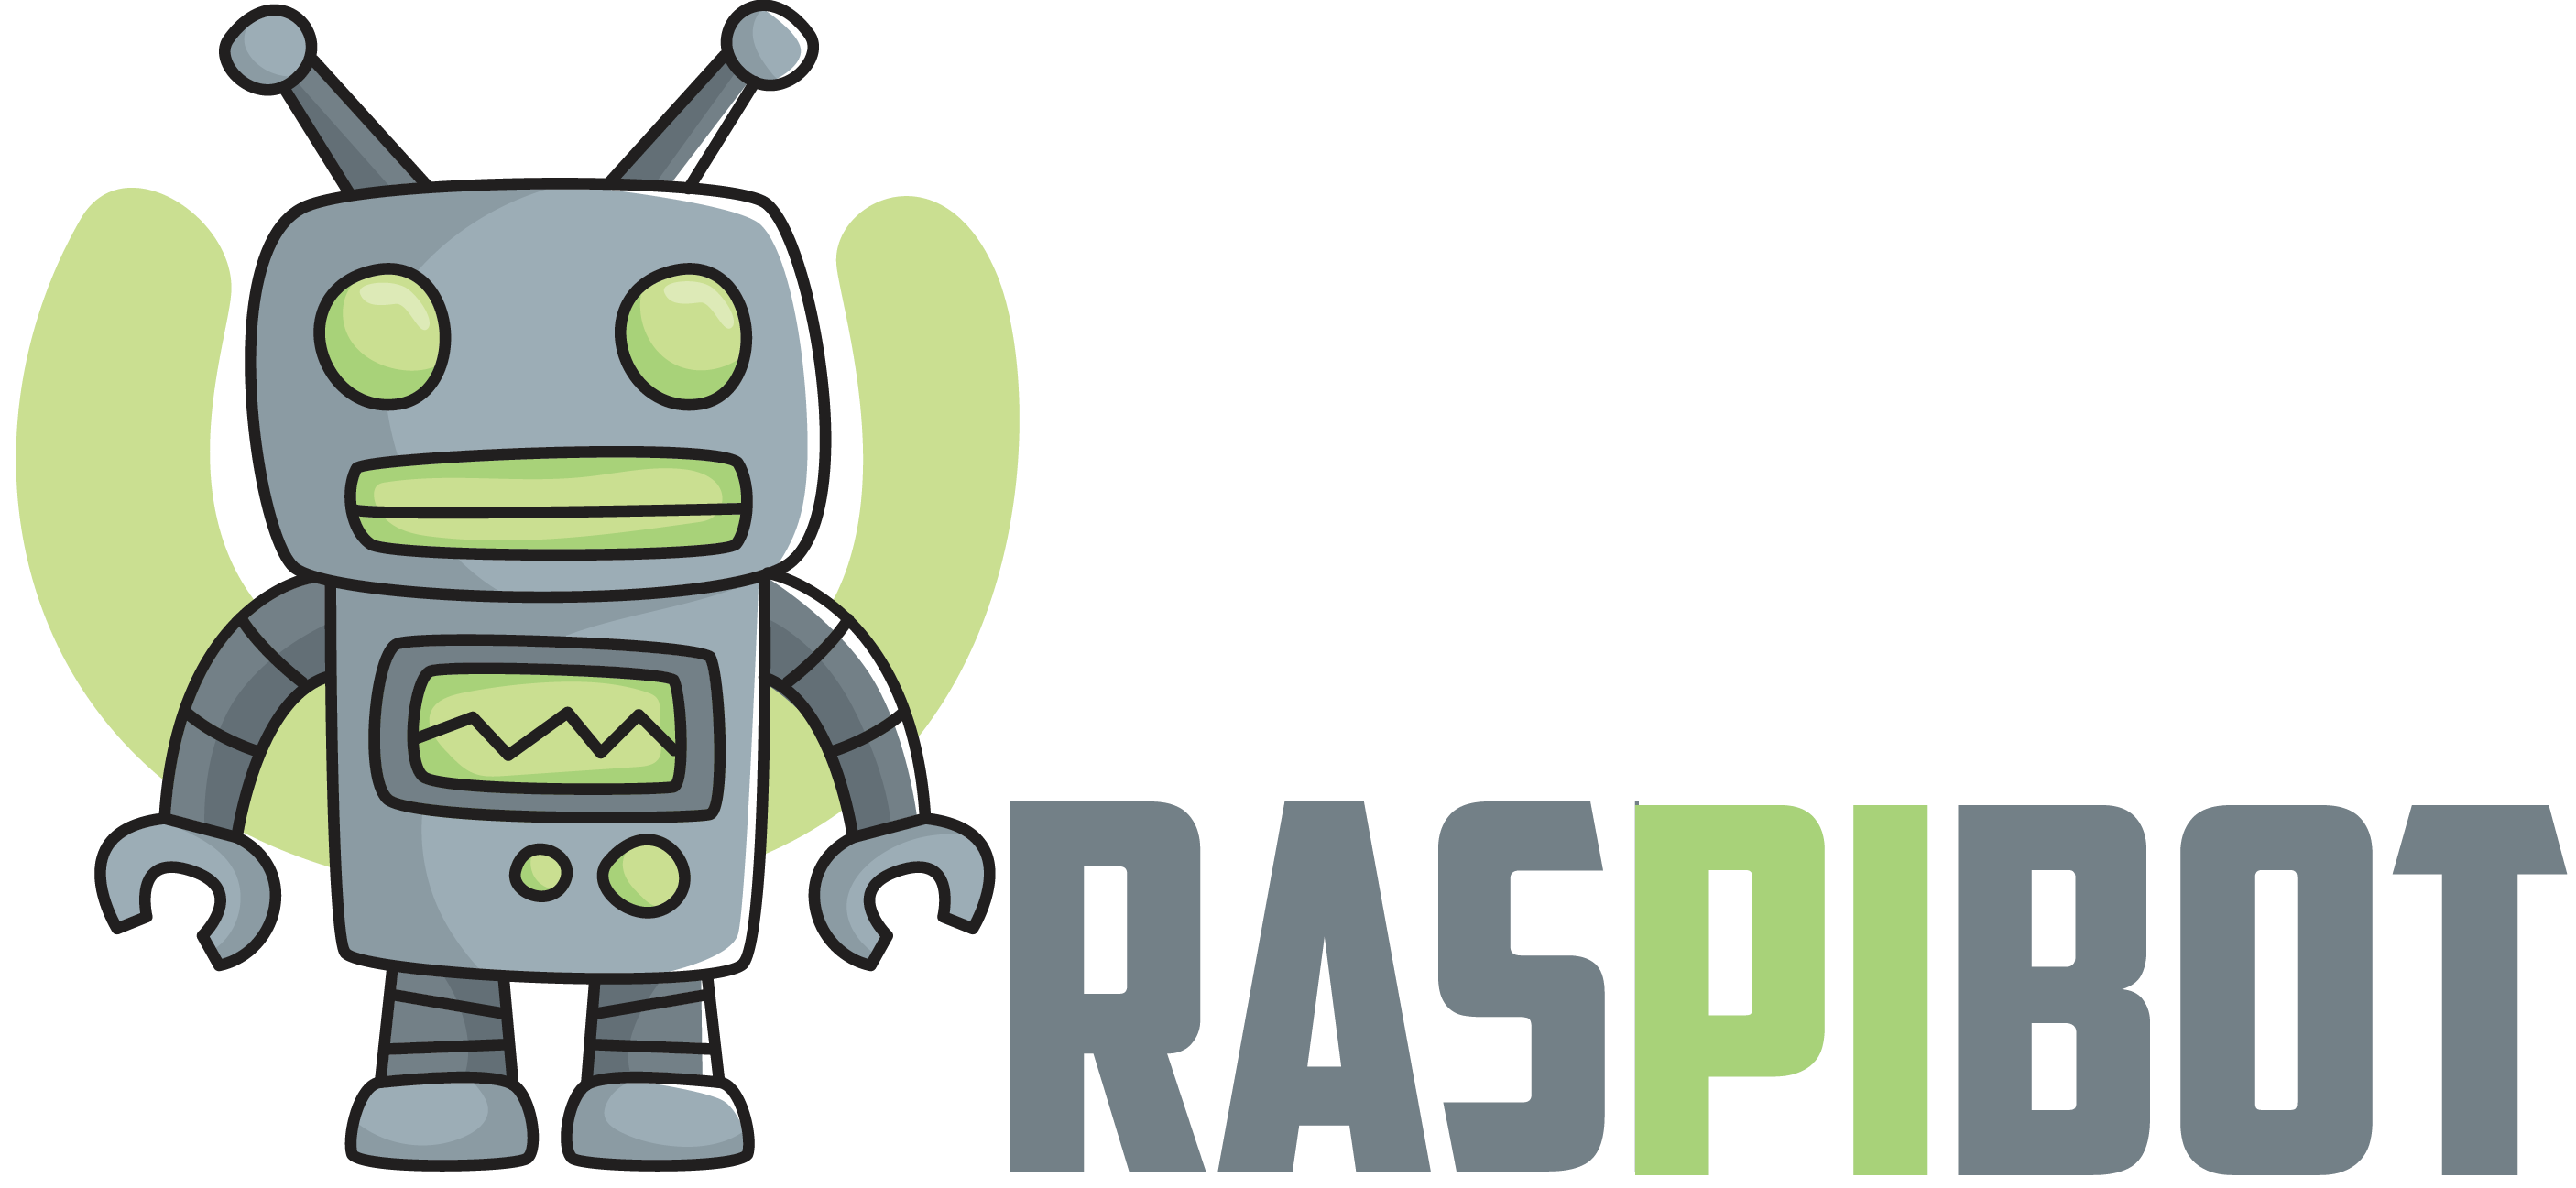 RasPiBot logo